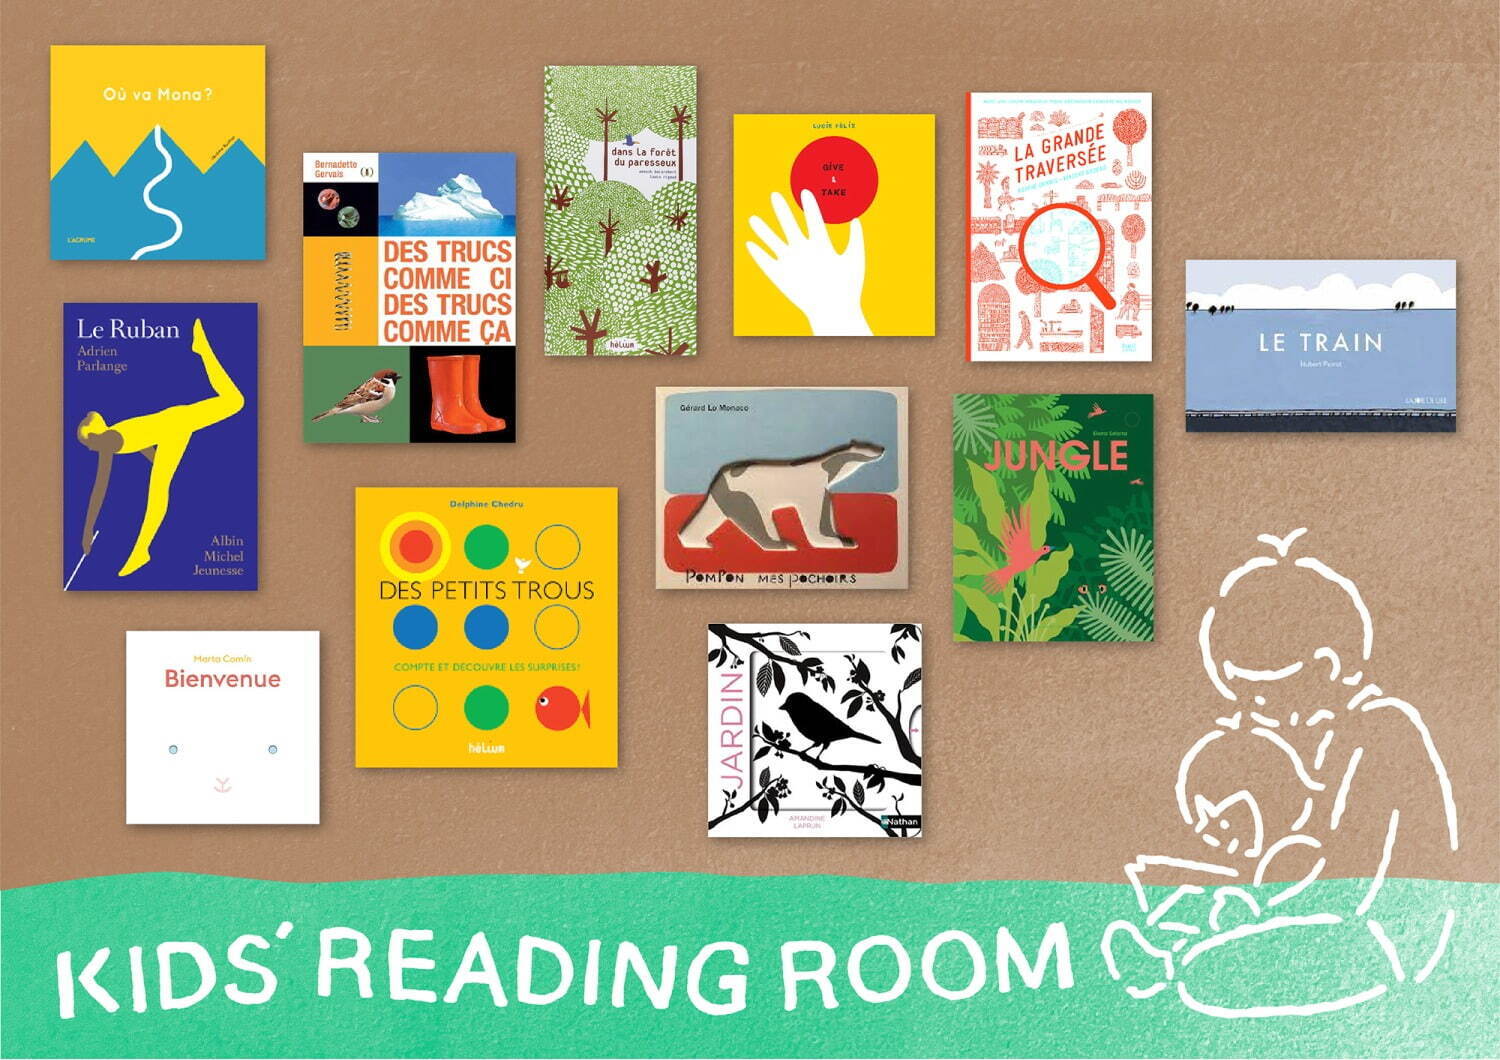 「Kidsʼ Reading Room」